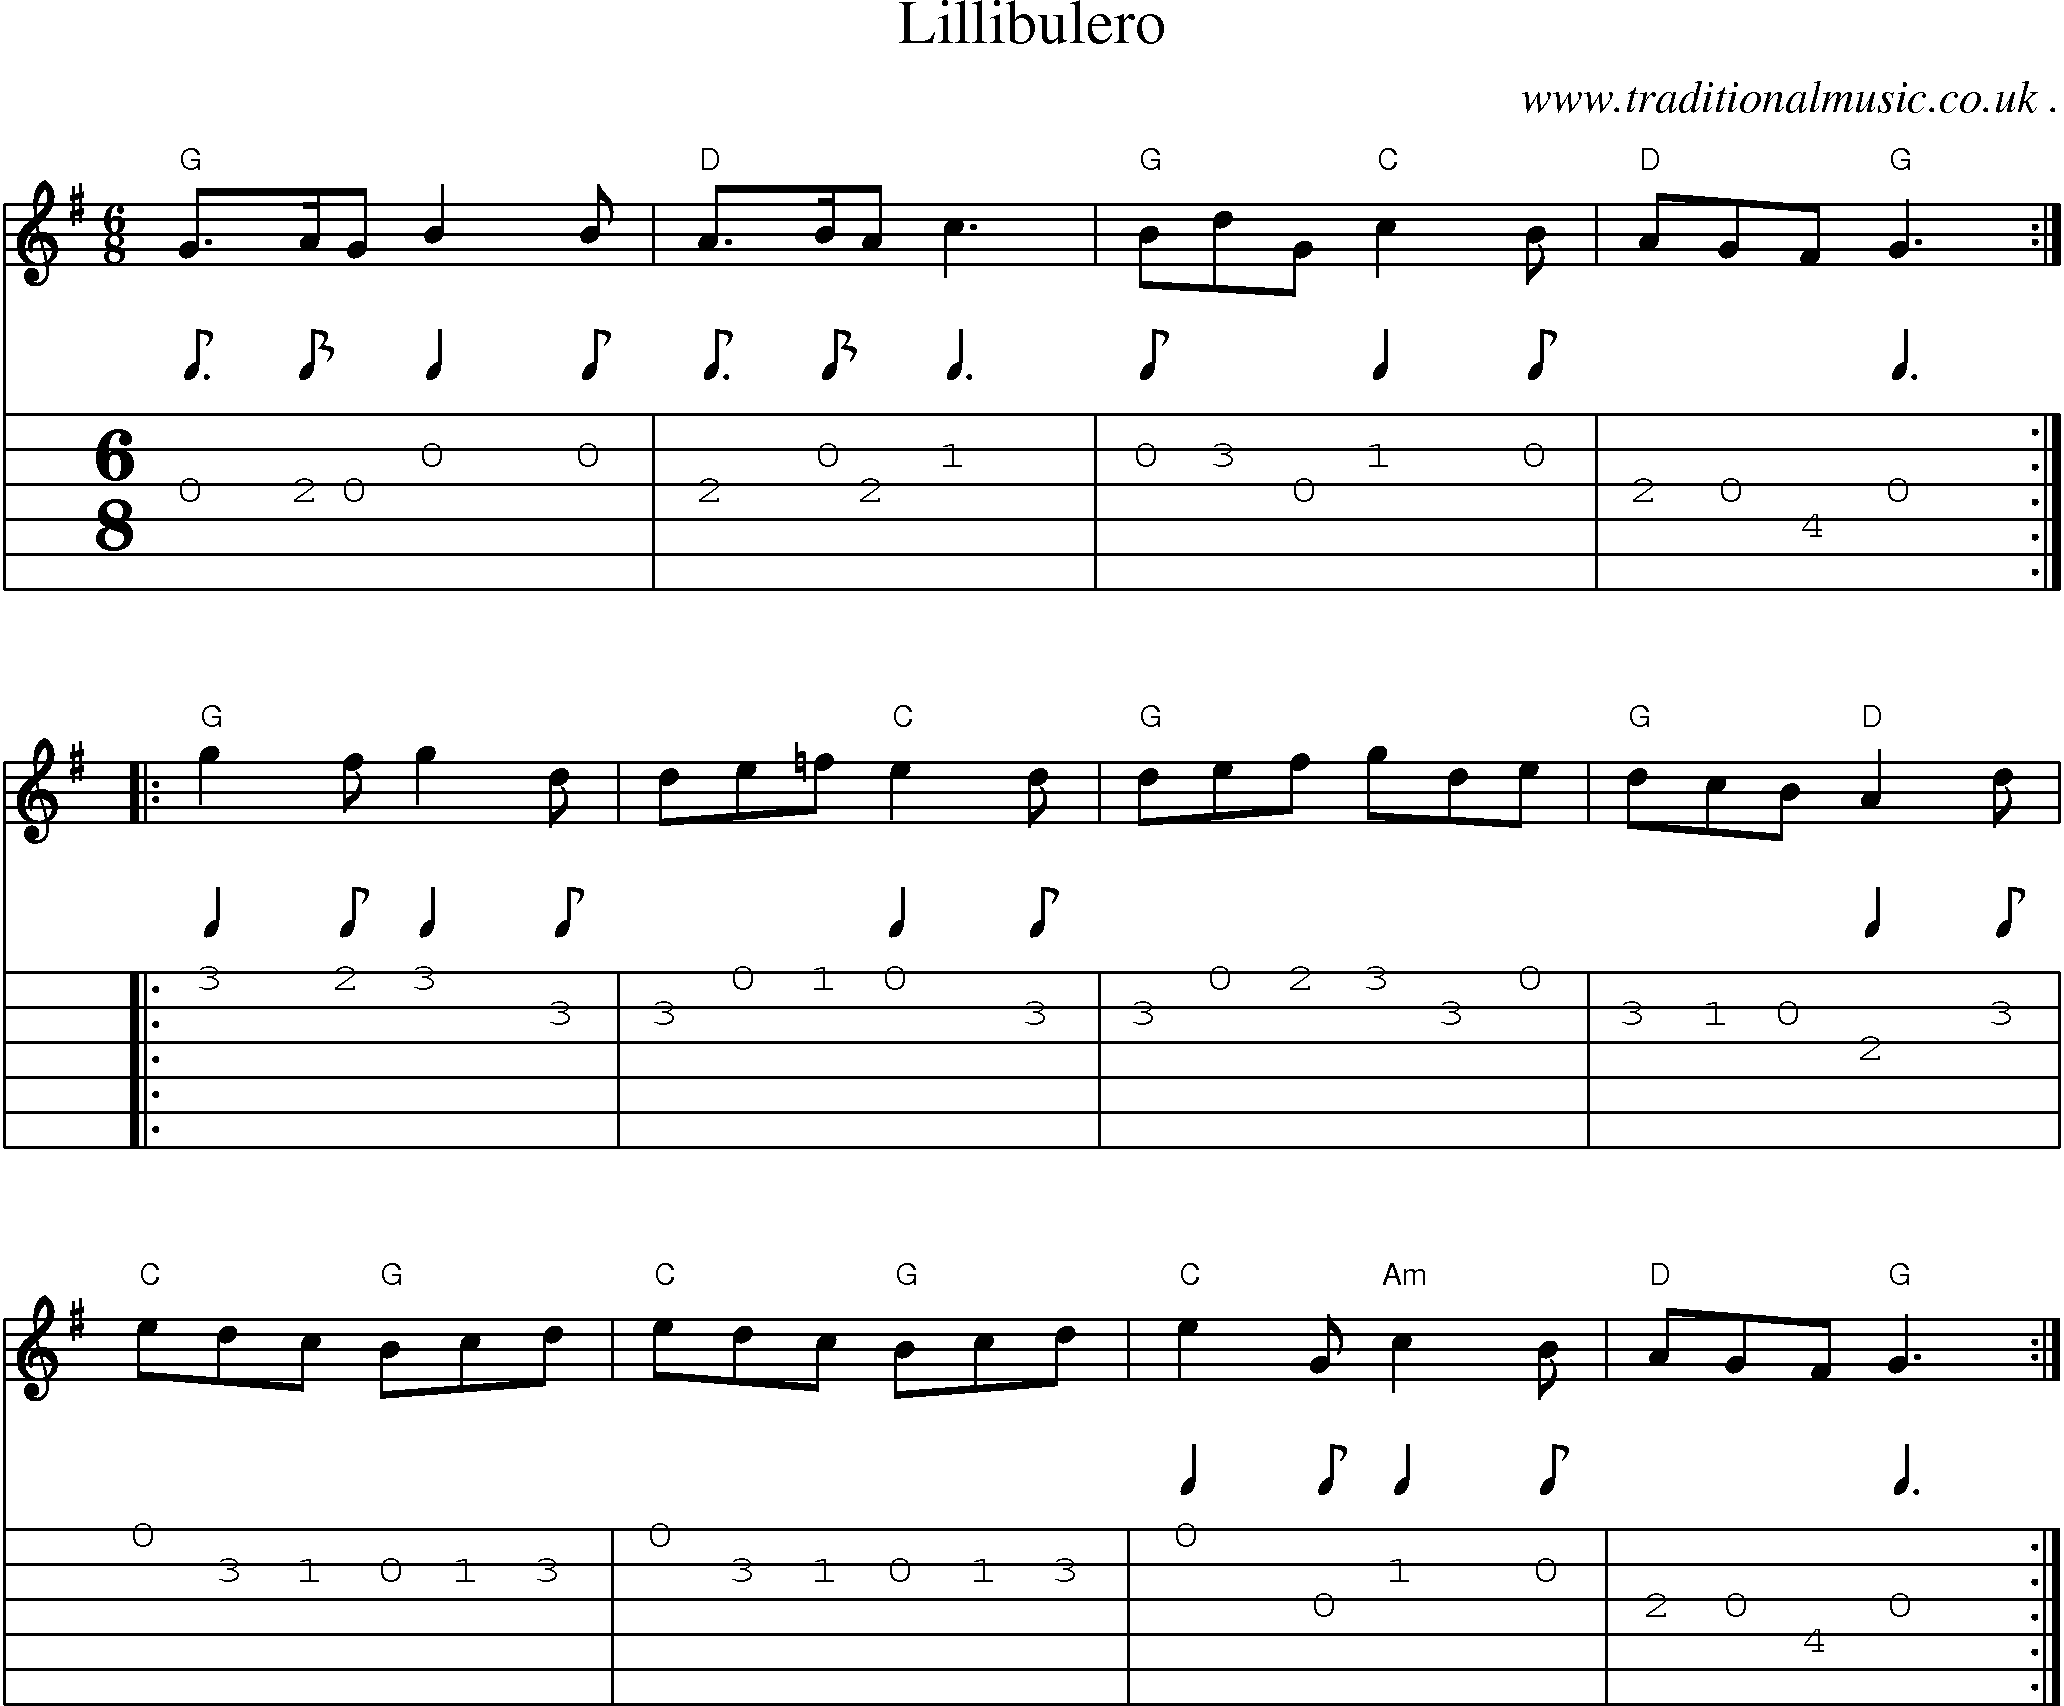 Music Score and Guitar Tabs for Lillibulero